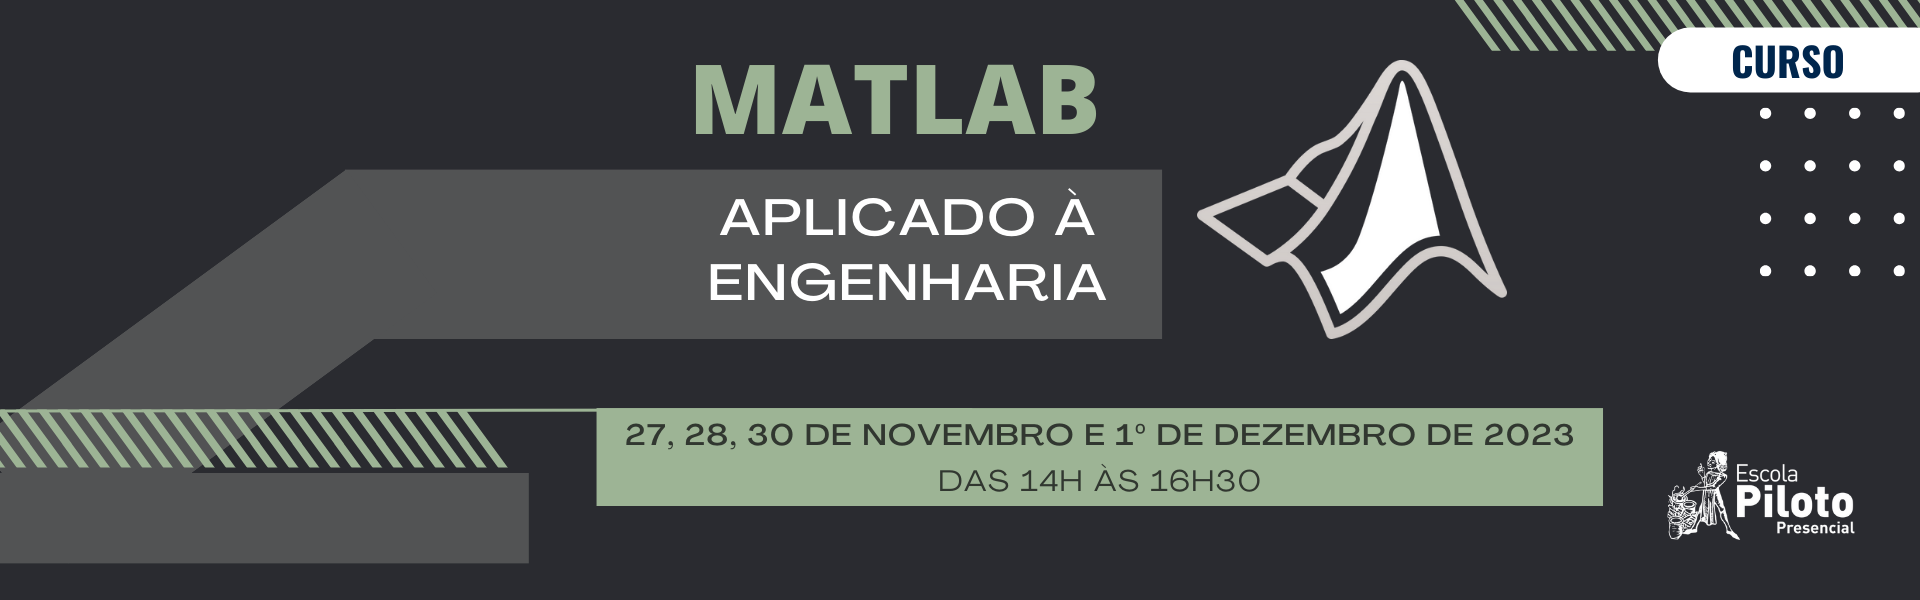 Matlab banner site 2